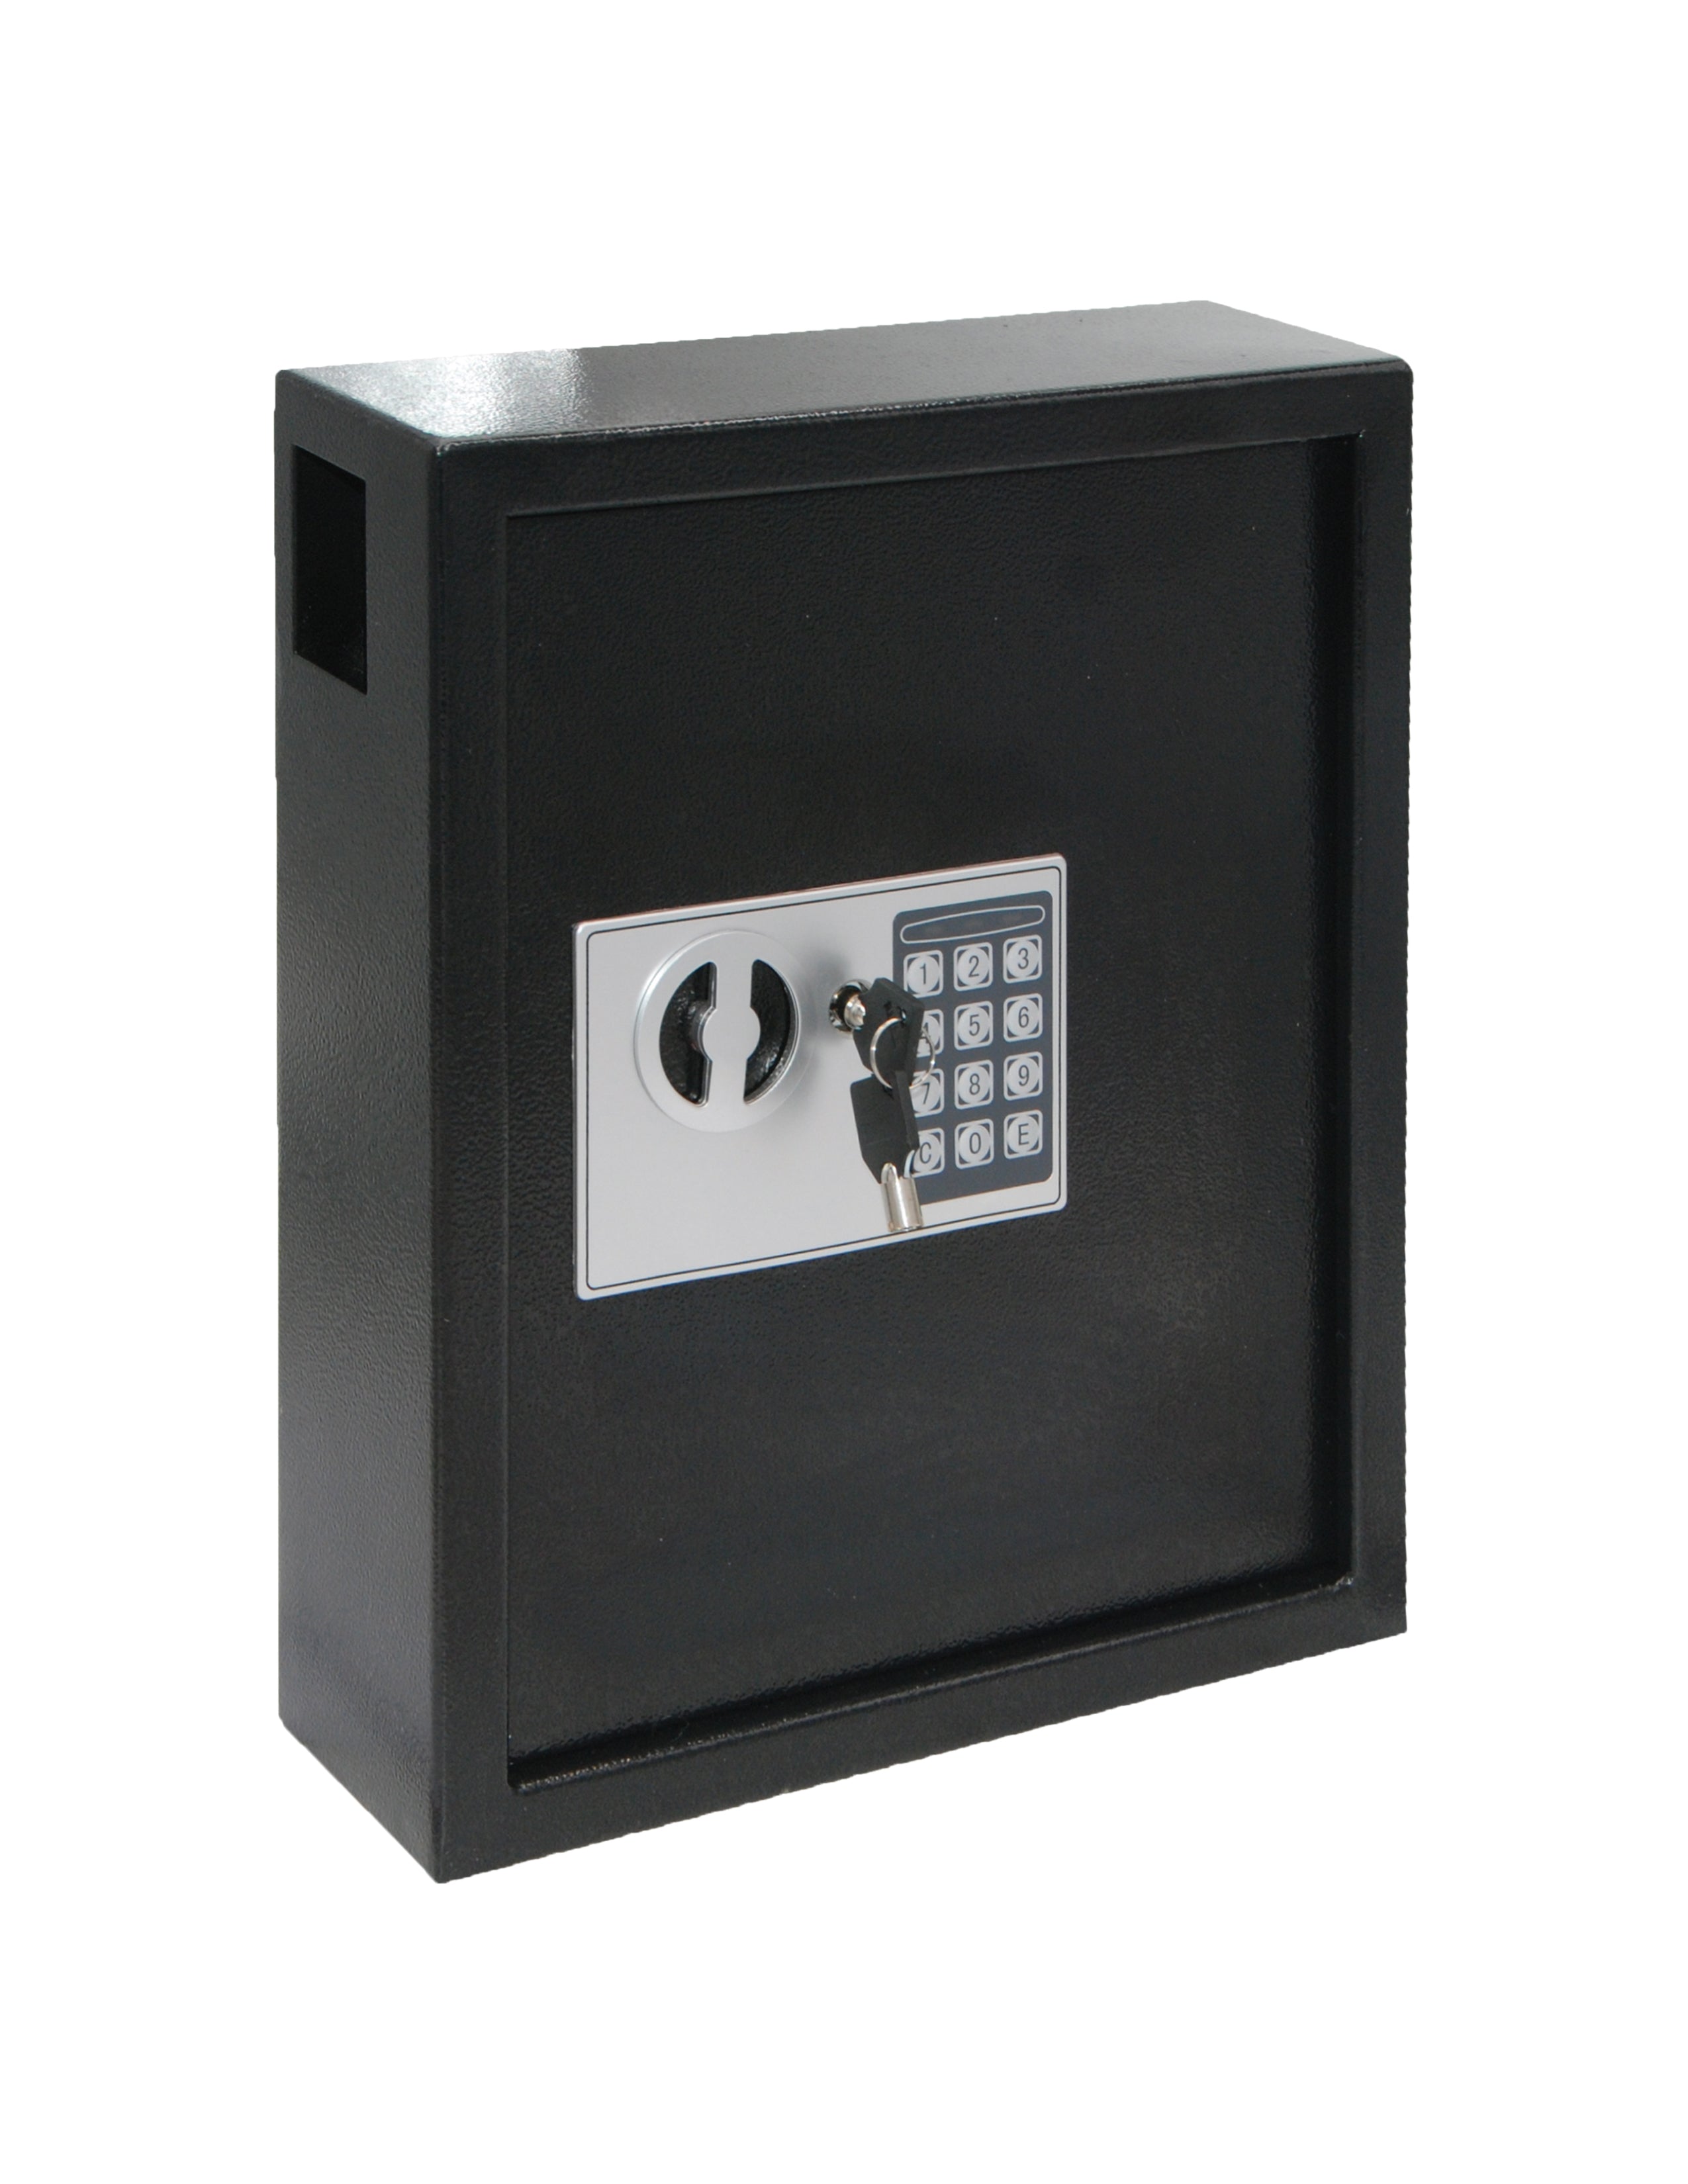 KMCG-48EL/ Electronic Key Safe - 48 keys